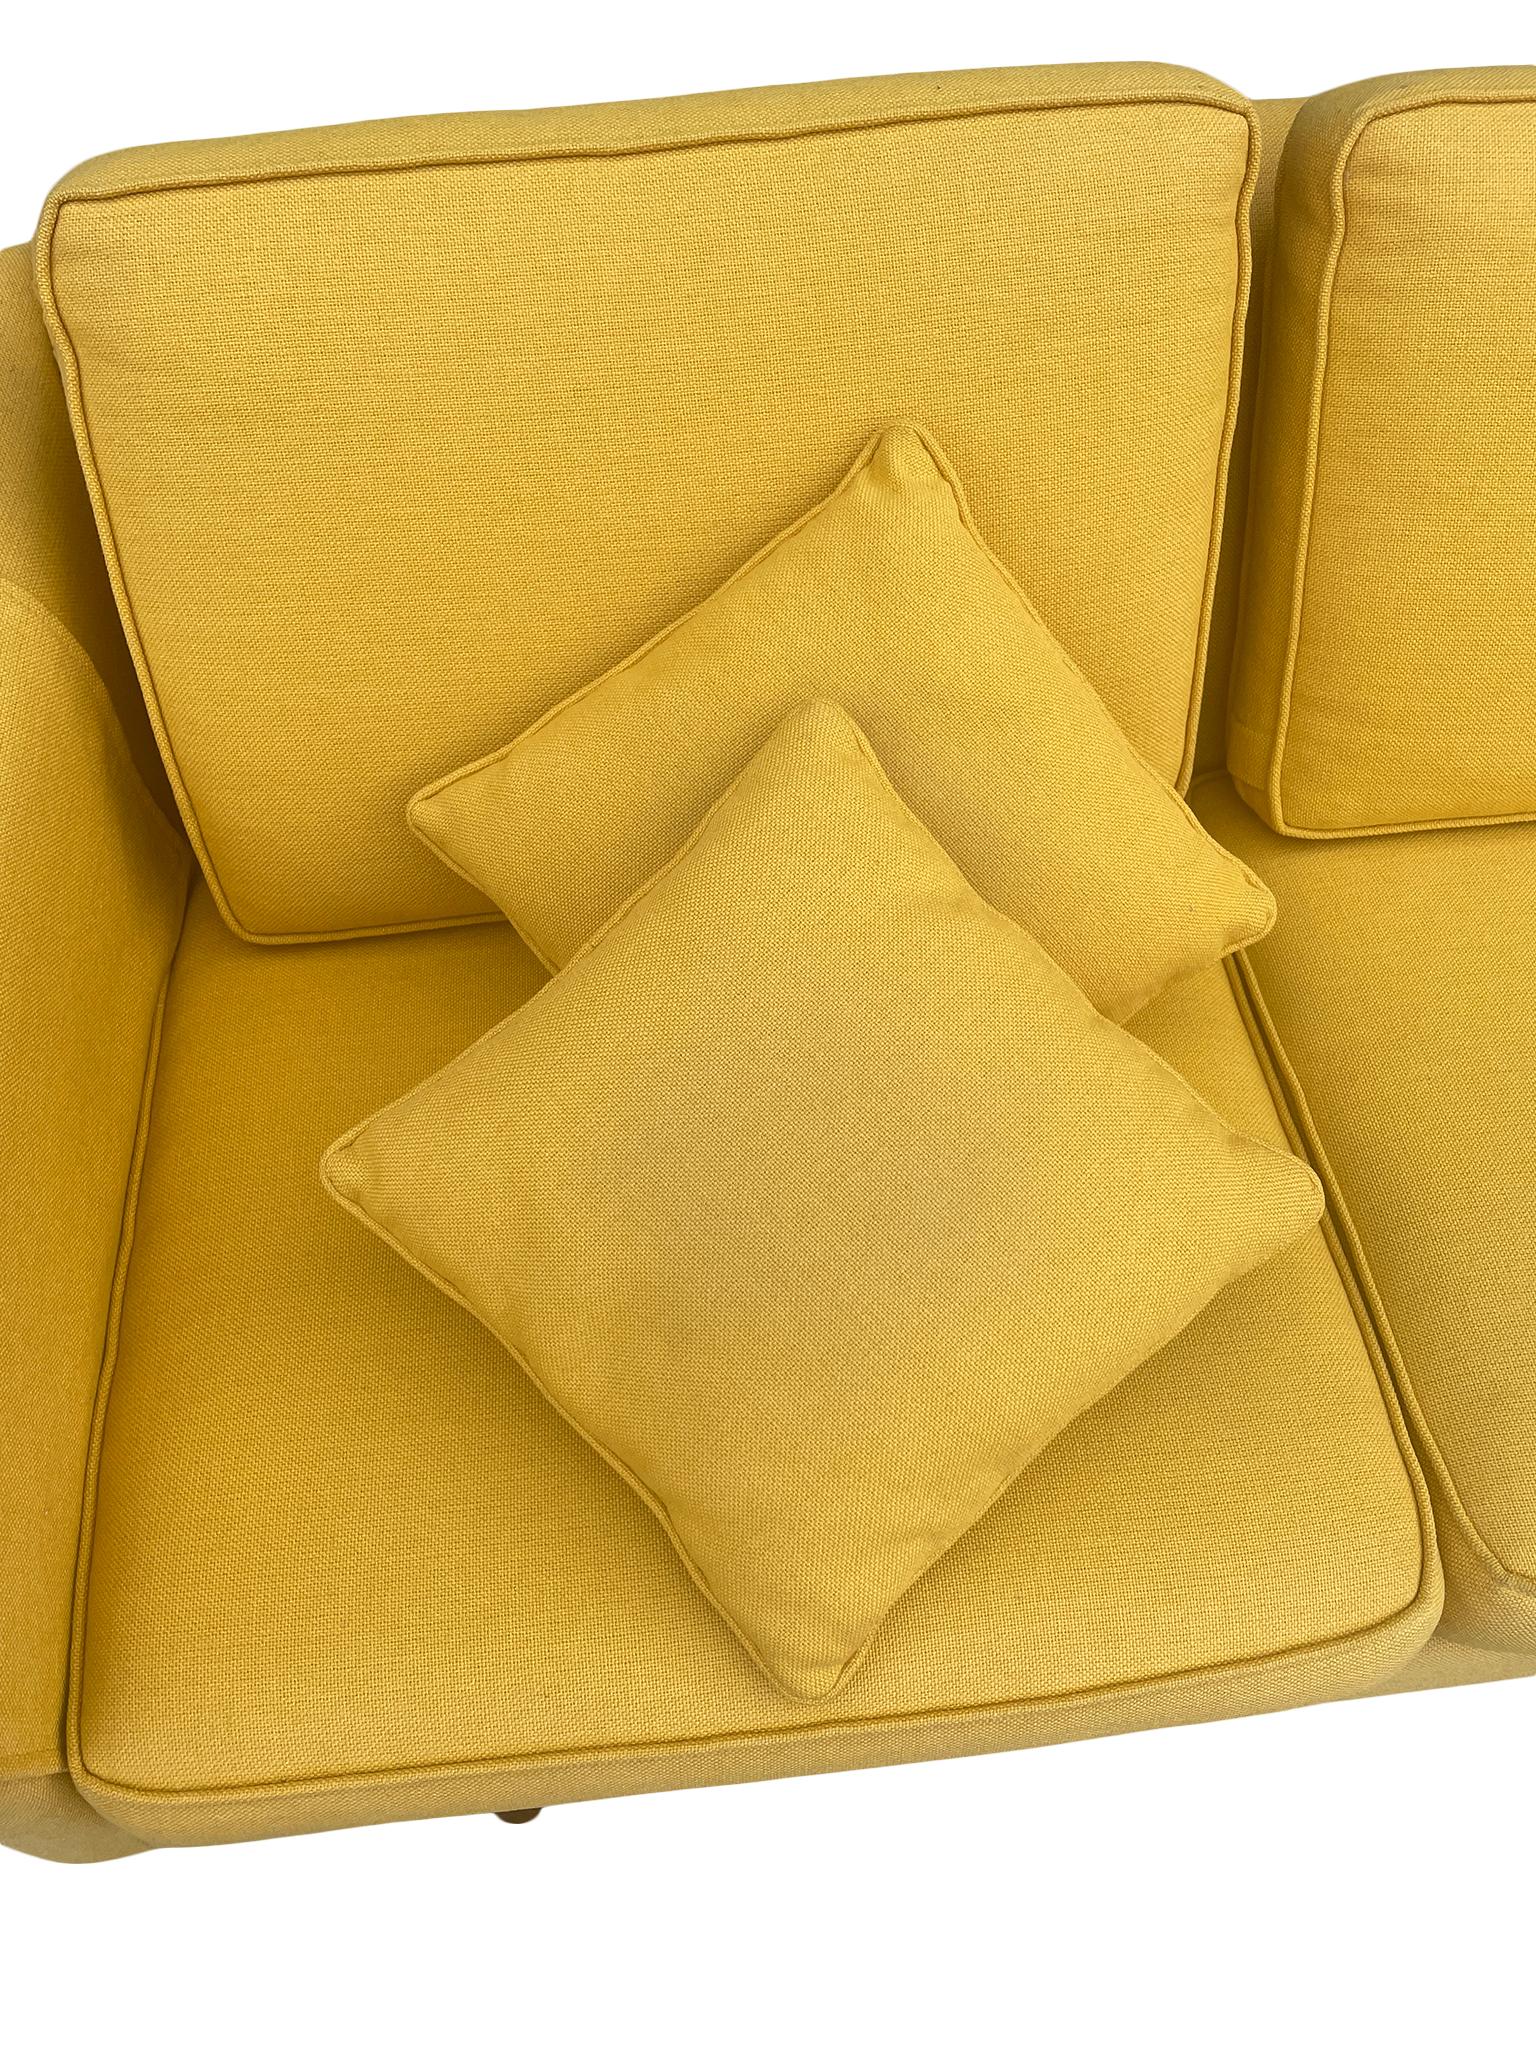 Mid-20th Century Mid-Century Modern Scandinavian 3 Seat Mustard Sofa Couch by DUX